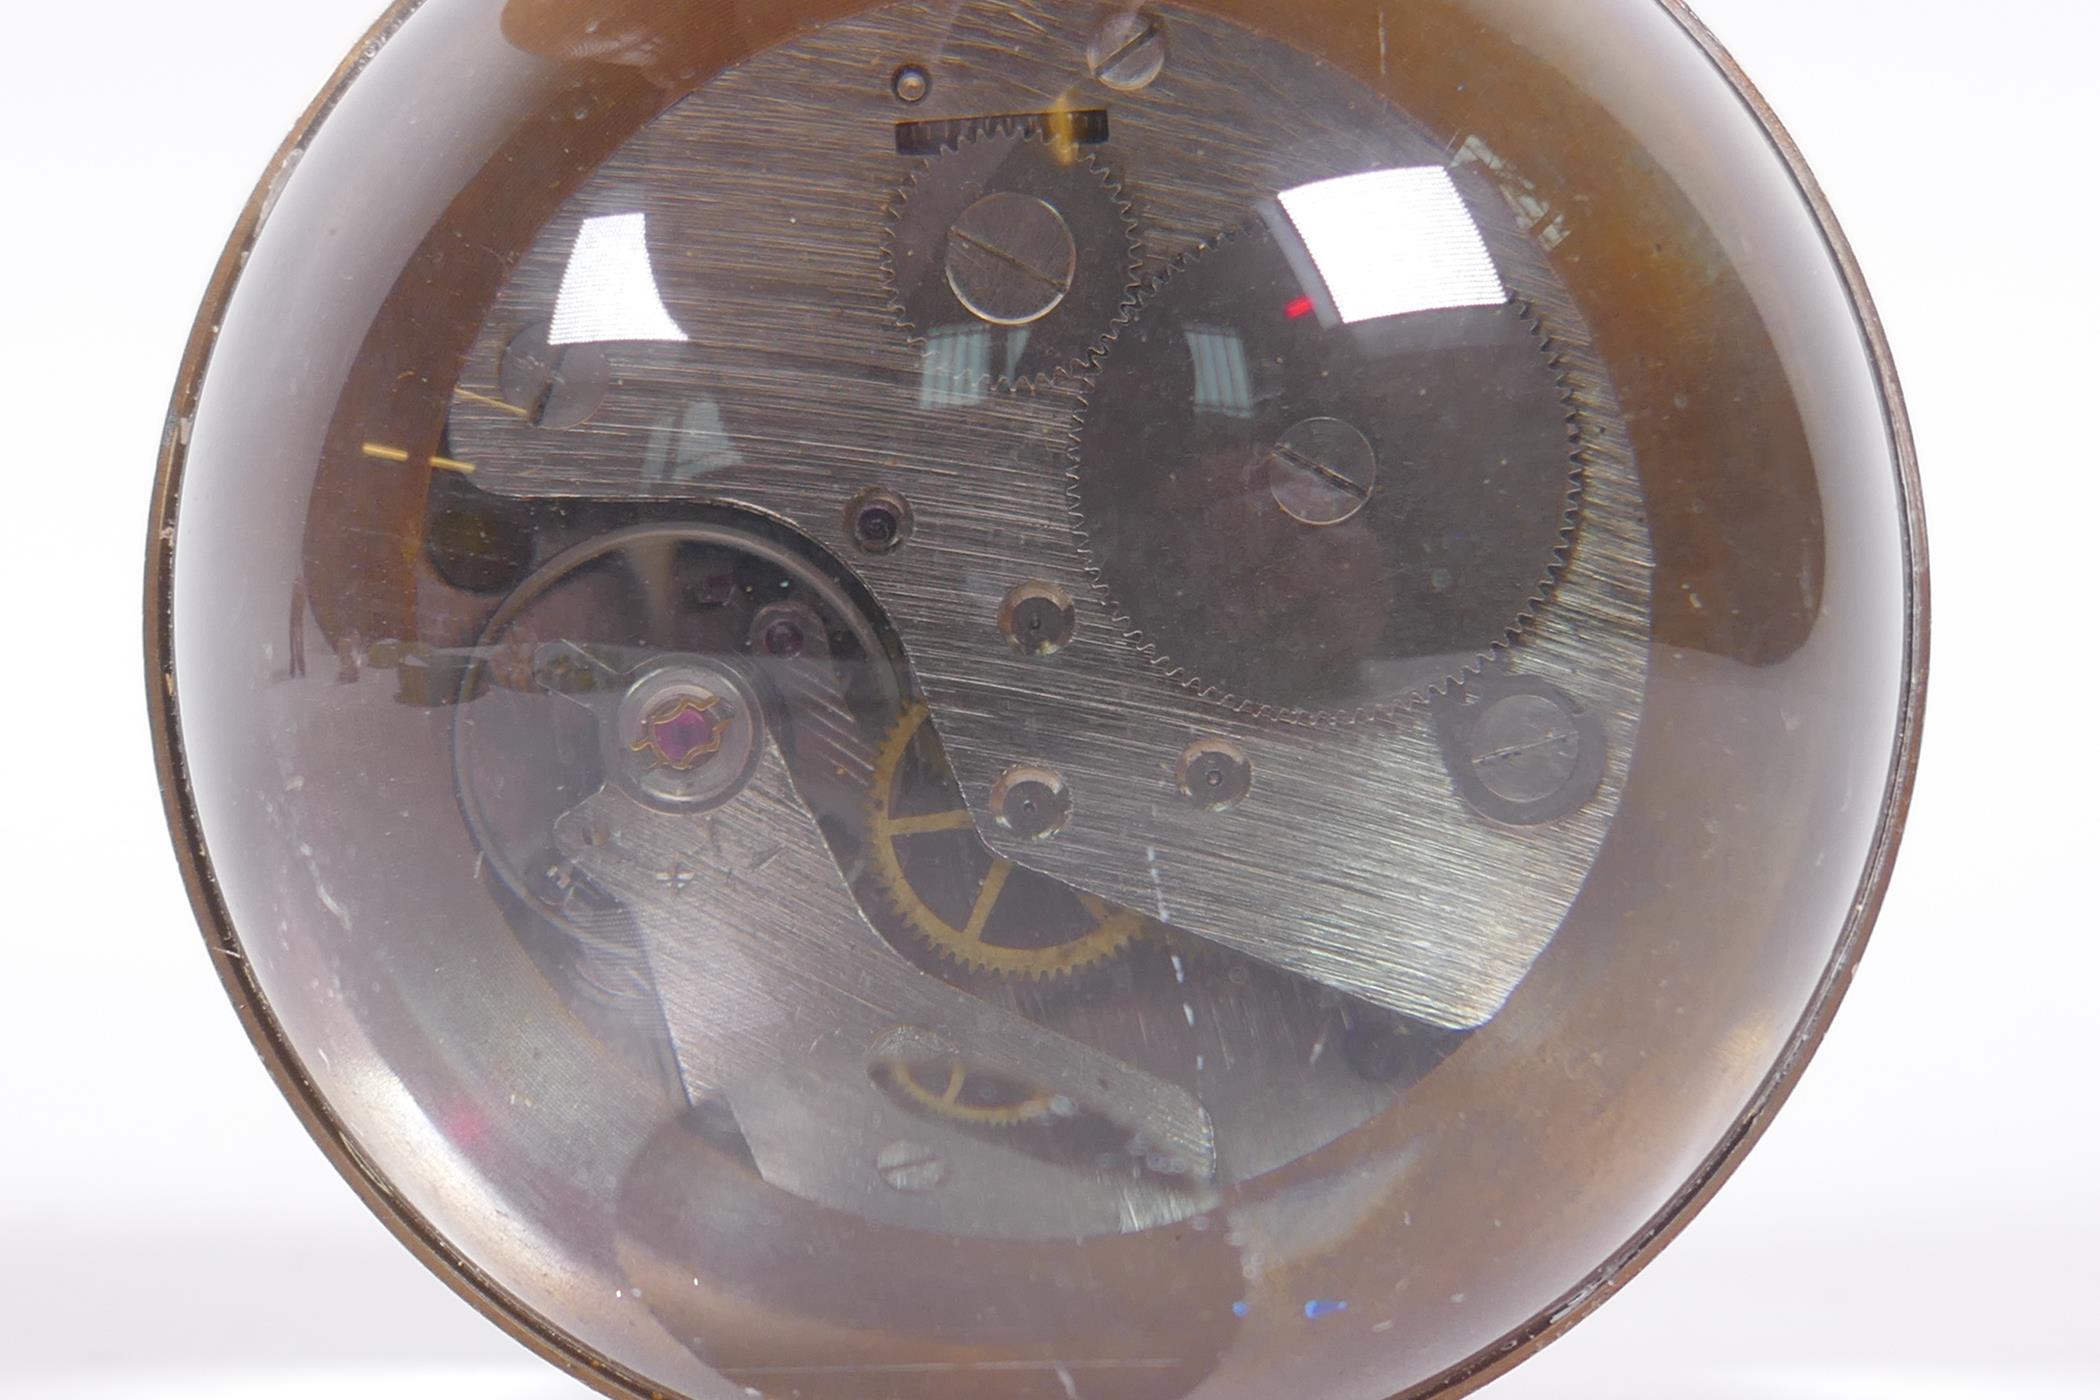 A brass and glass ball desk clock, 6cm diameter - Image 4 of 4